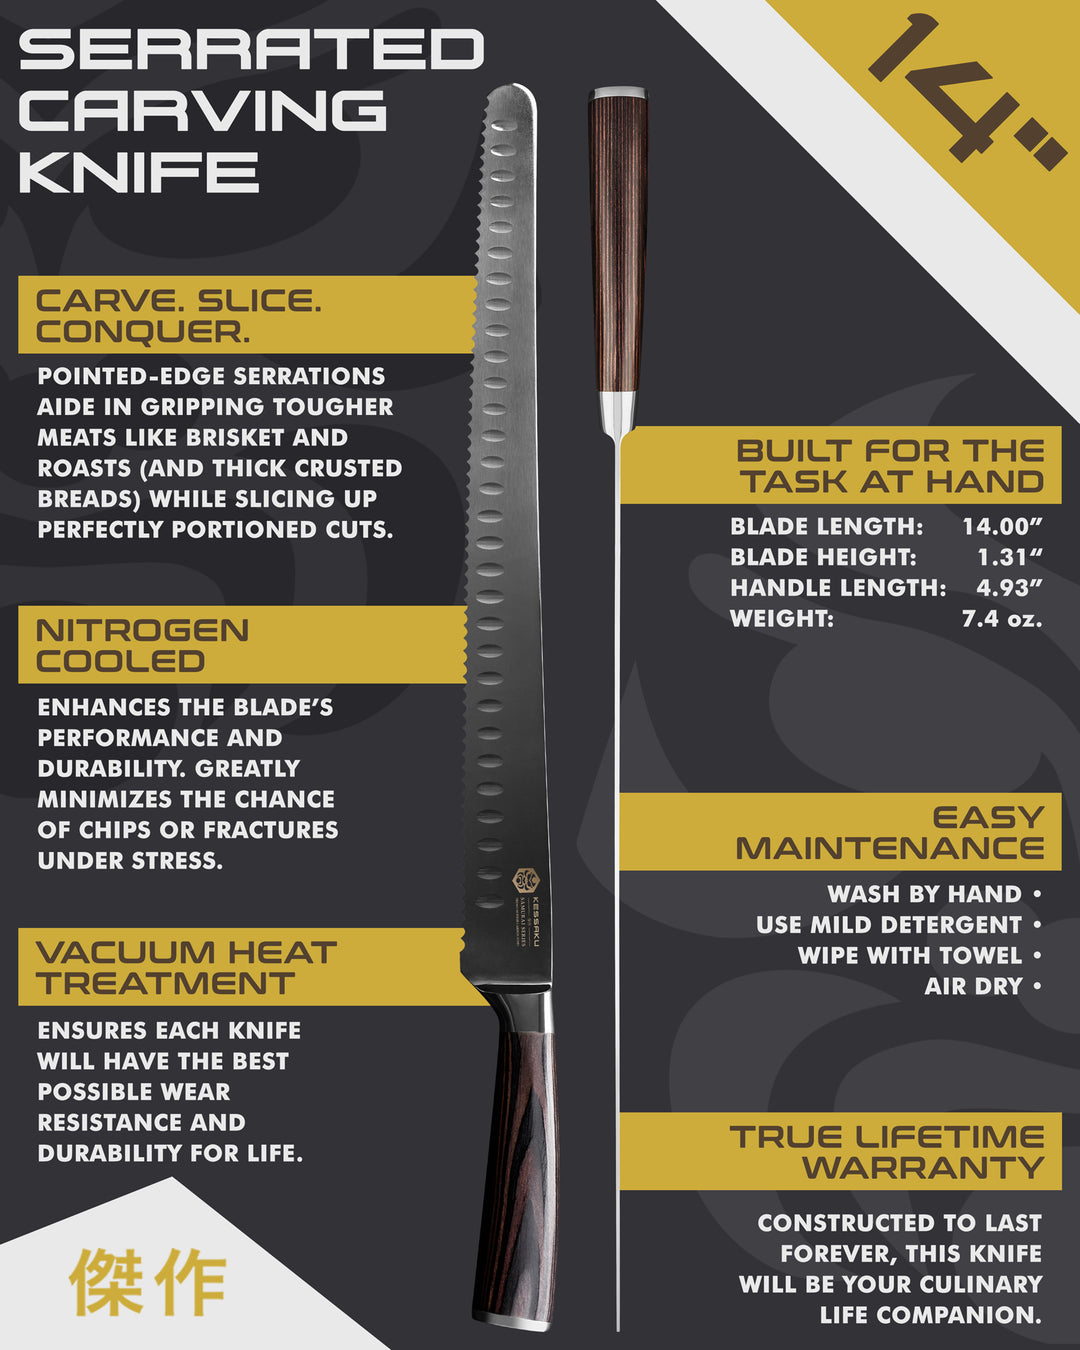 Kessaku Samurai Series Serrated Carving Knife uses, dimensions, maintenance, warranty info, and additional blade treatments